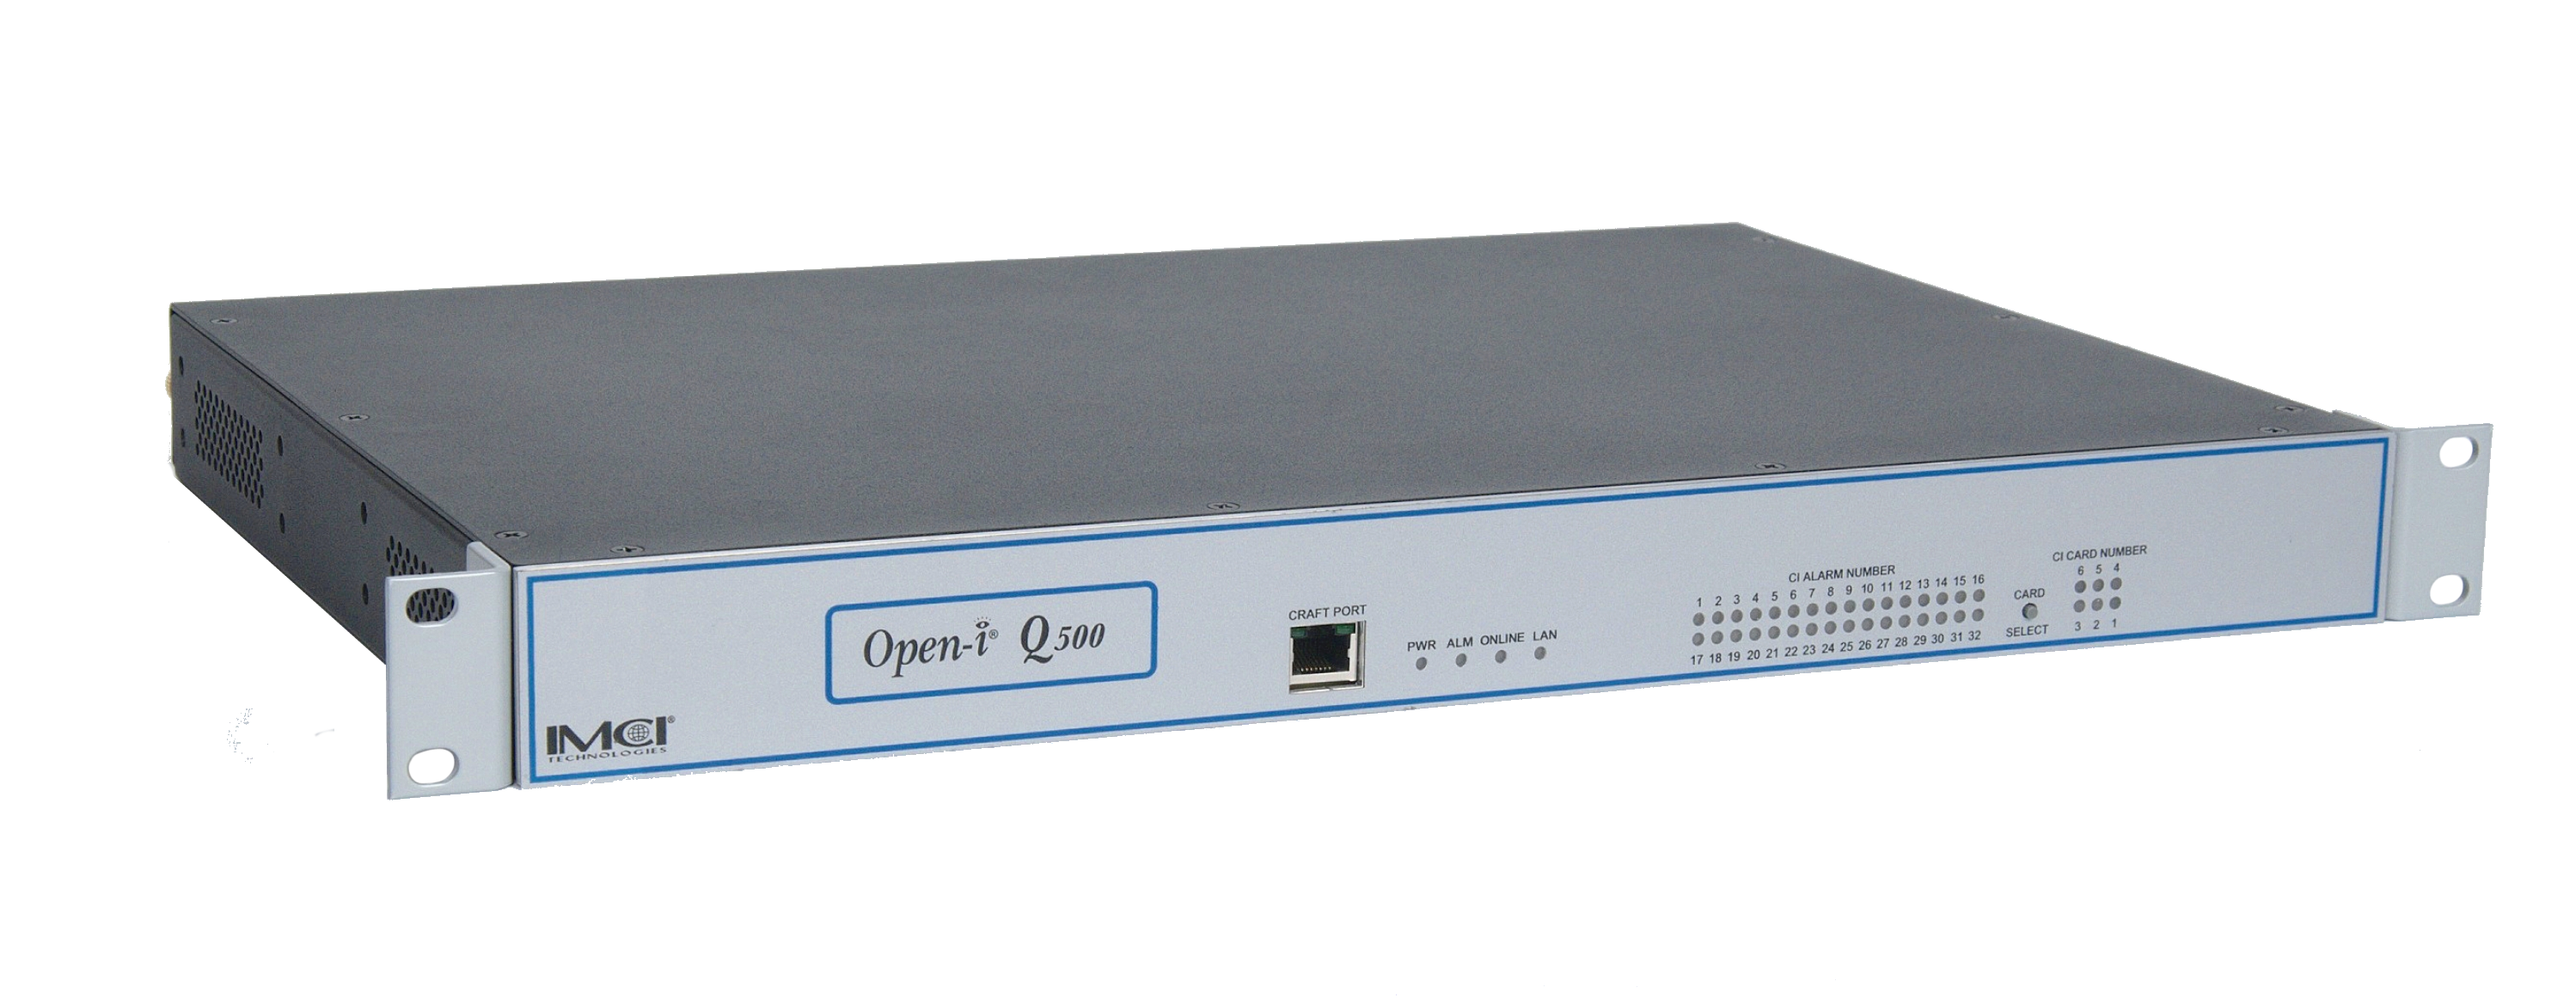 Open-i Q500